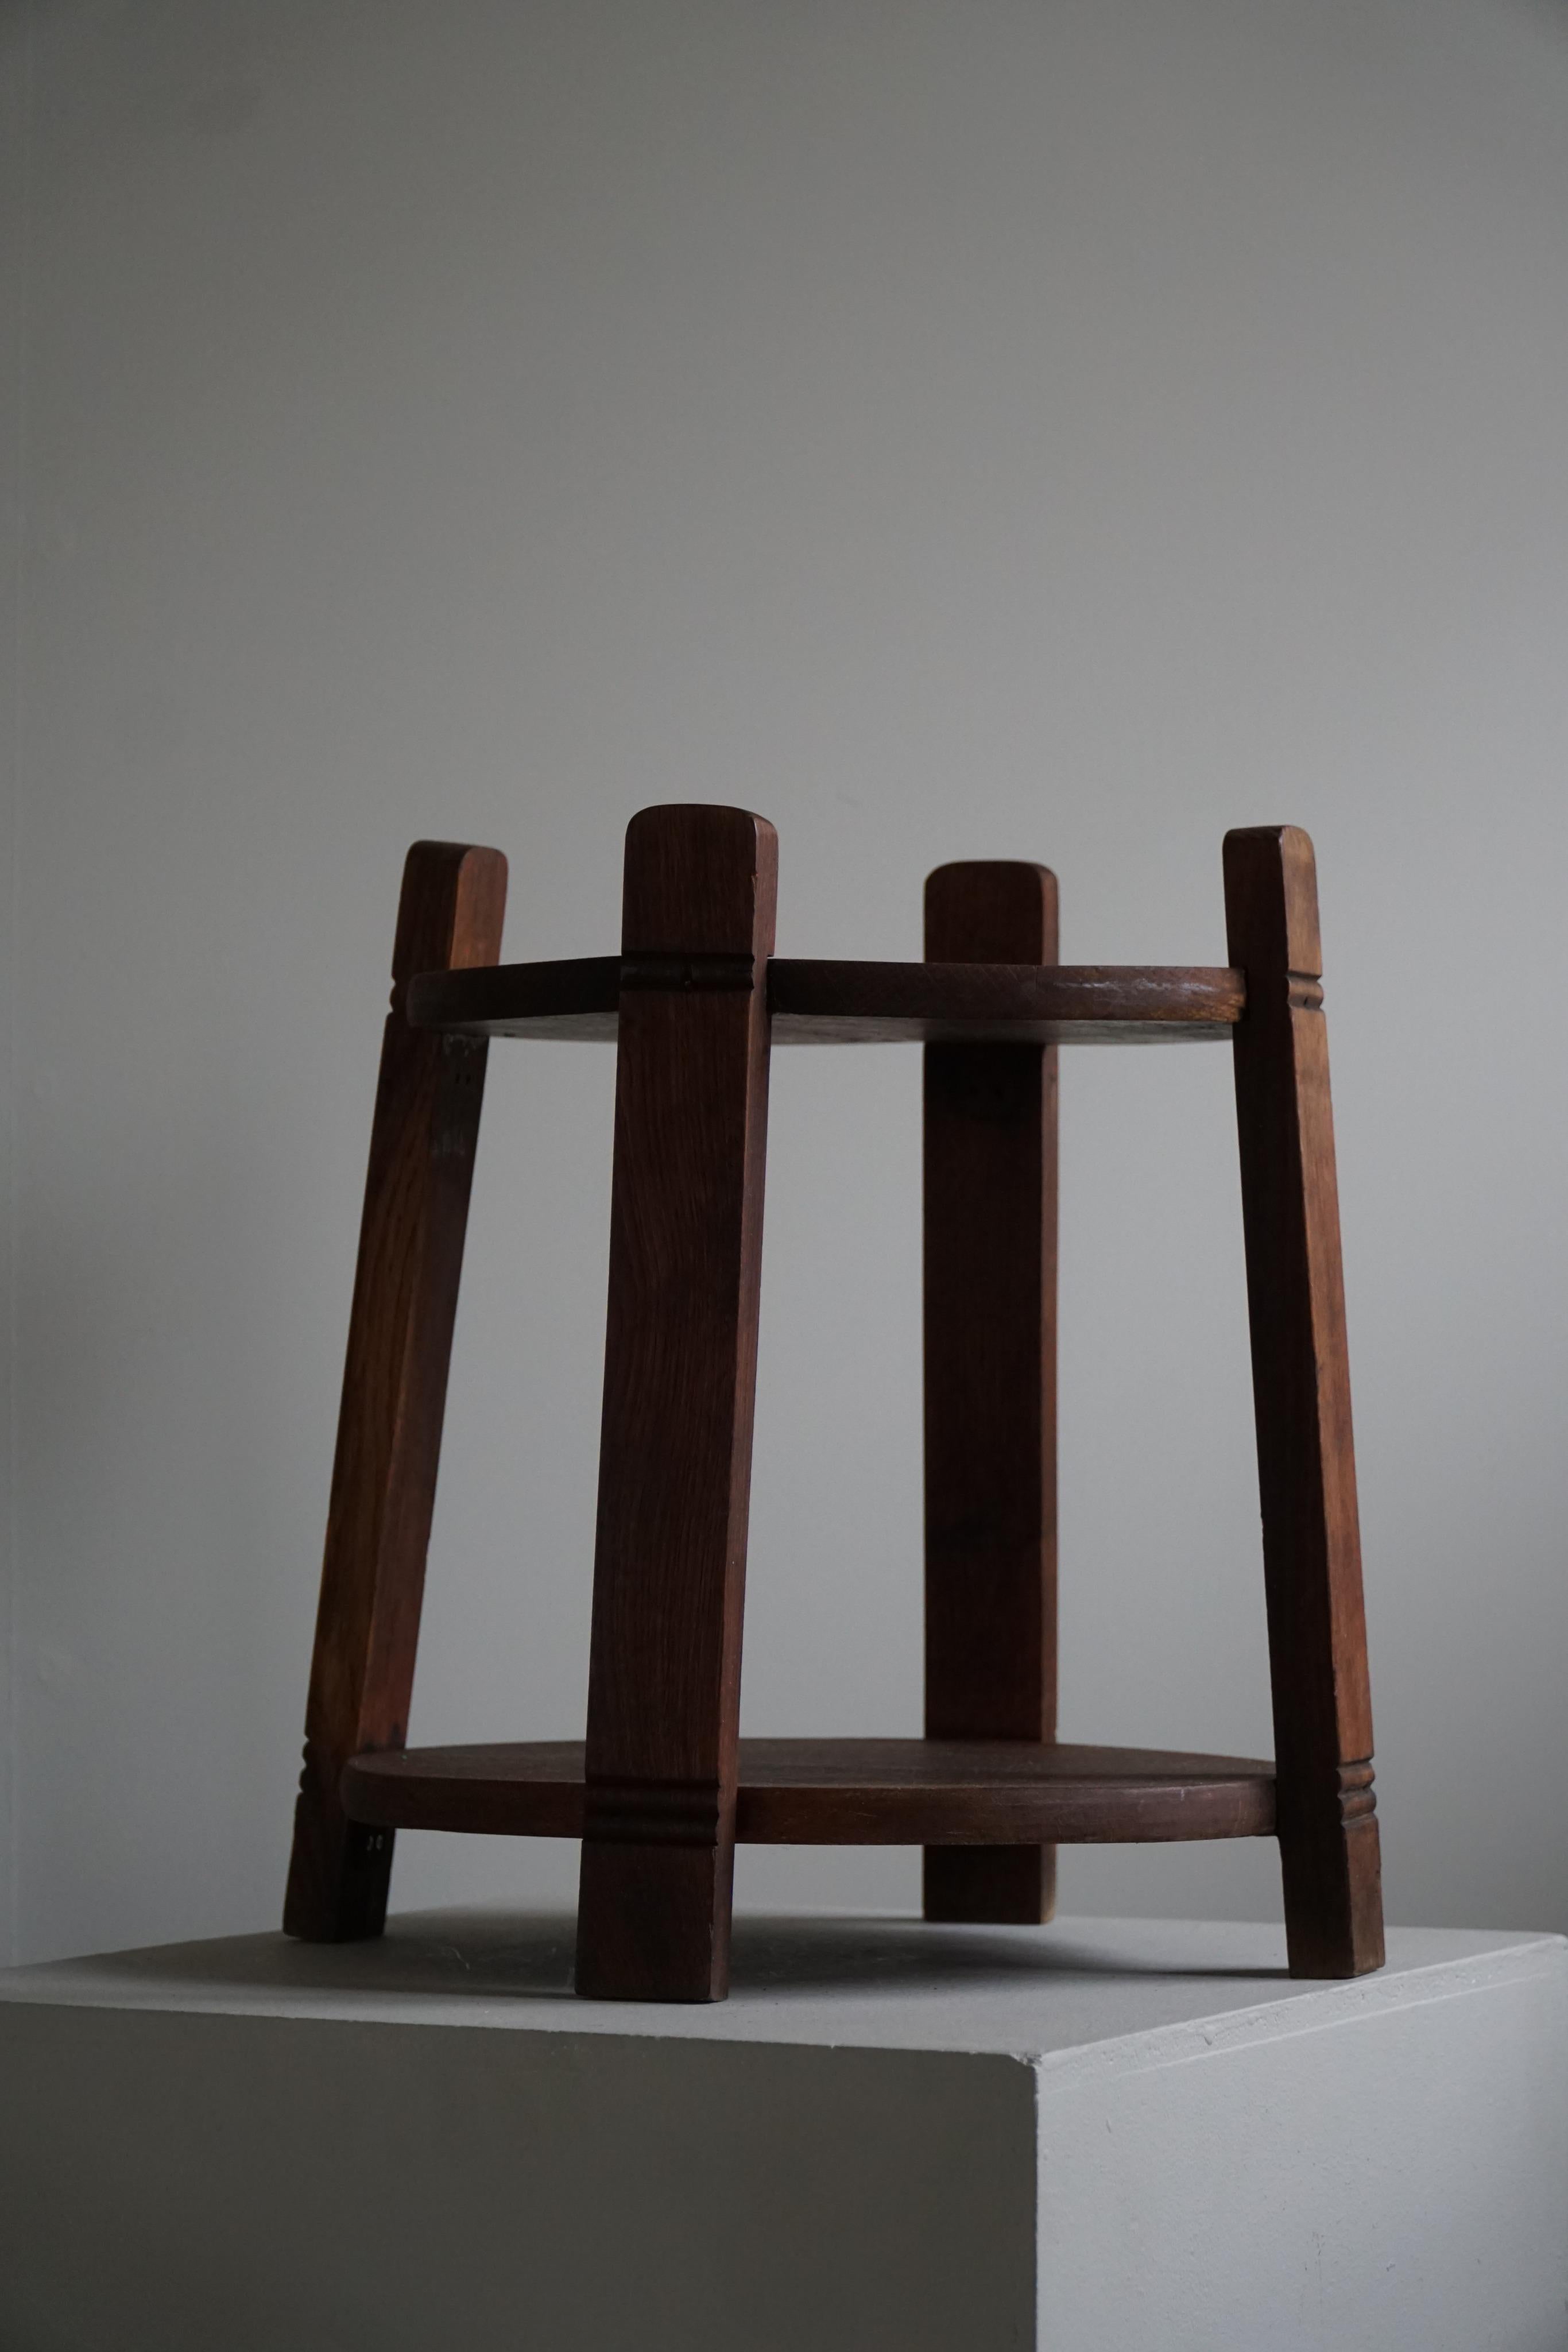 20th Century Round Side Table / Pedestal in Solid Oak, Danish Modern, Midcentury, 1950s